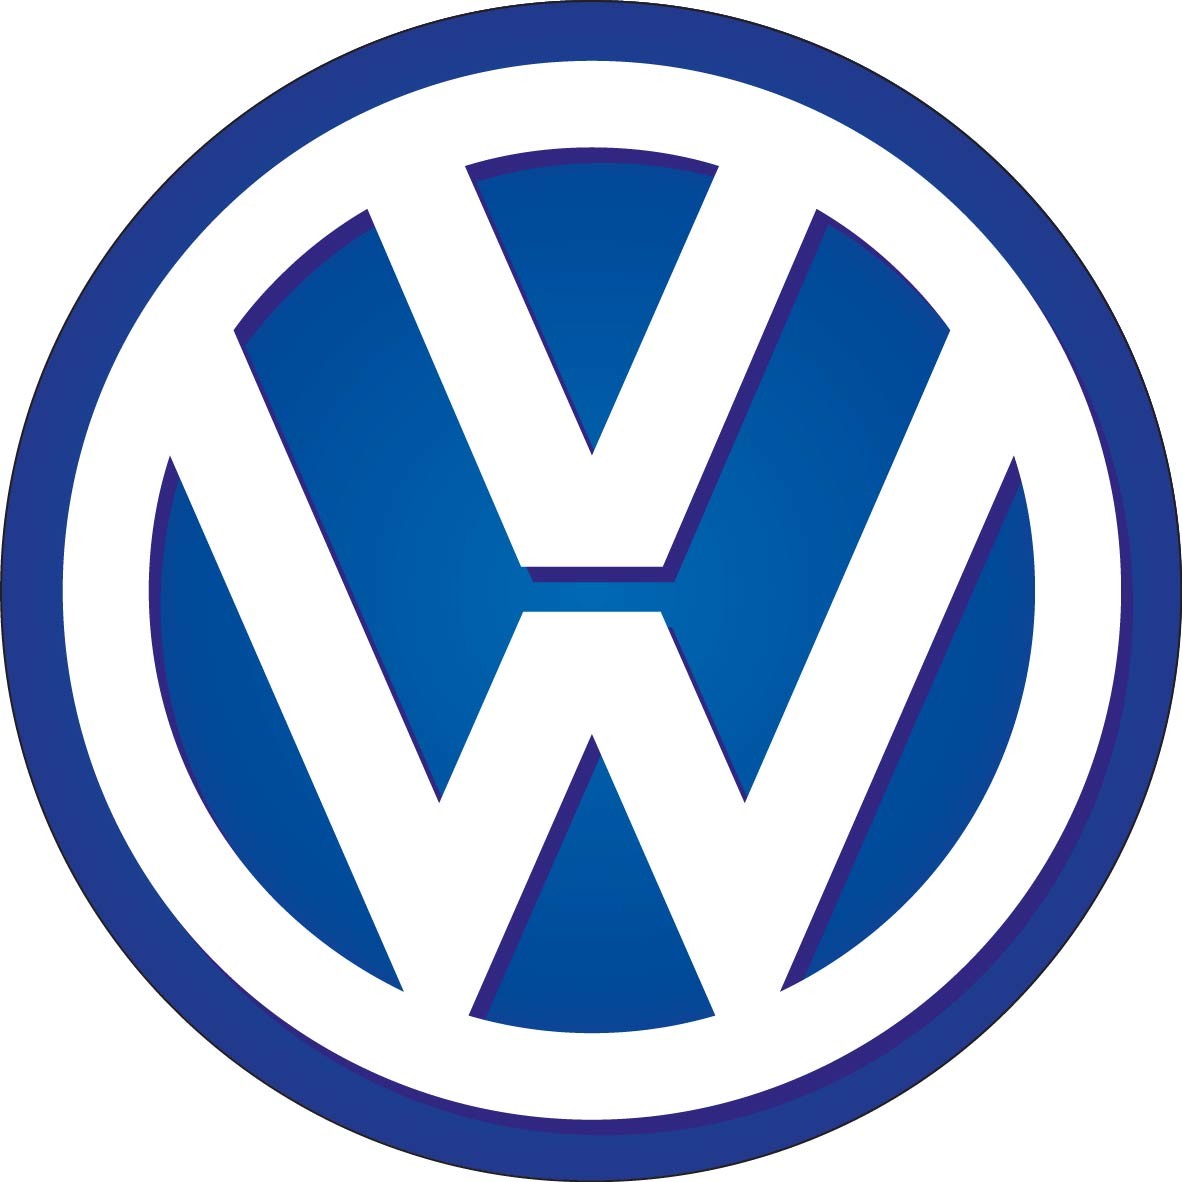 https://www.art-deco-stickers.fr/16895/stickers-autocollant-logo-embleme-volkswagen.jpg